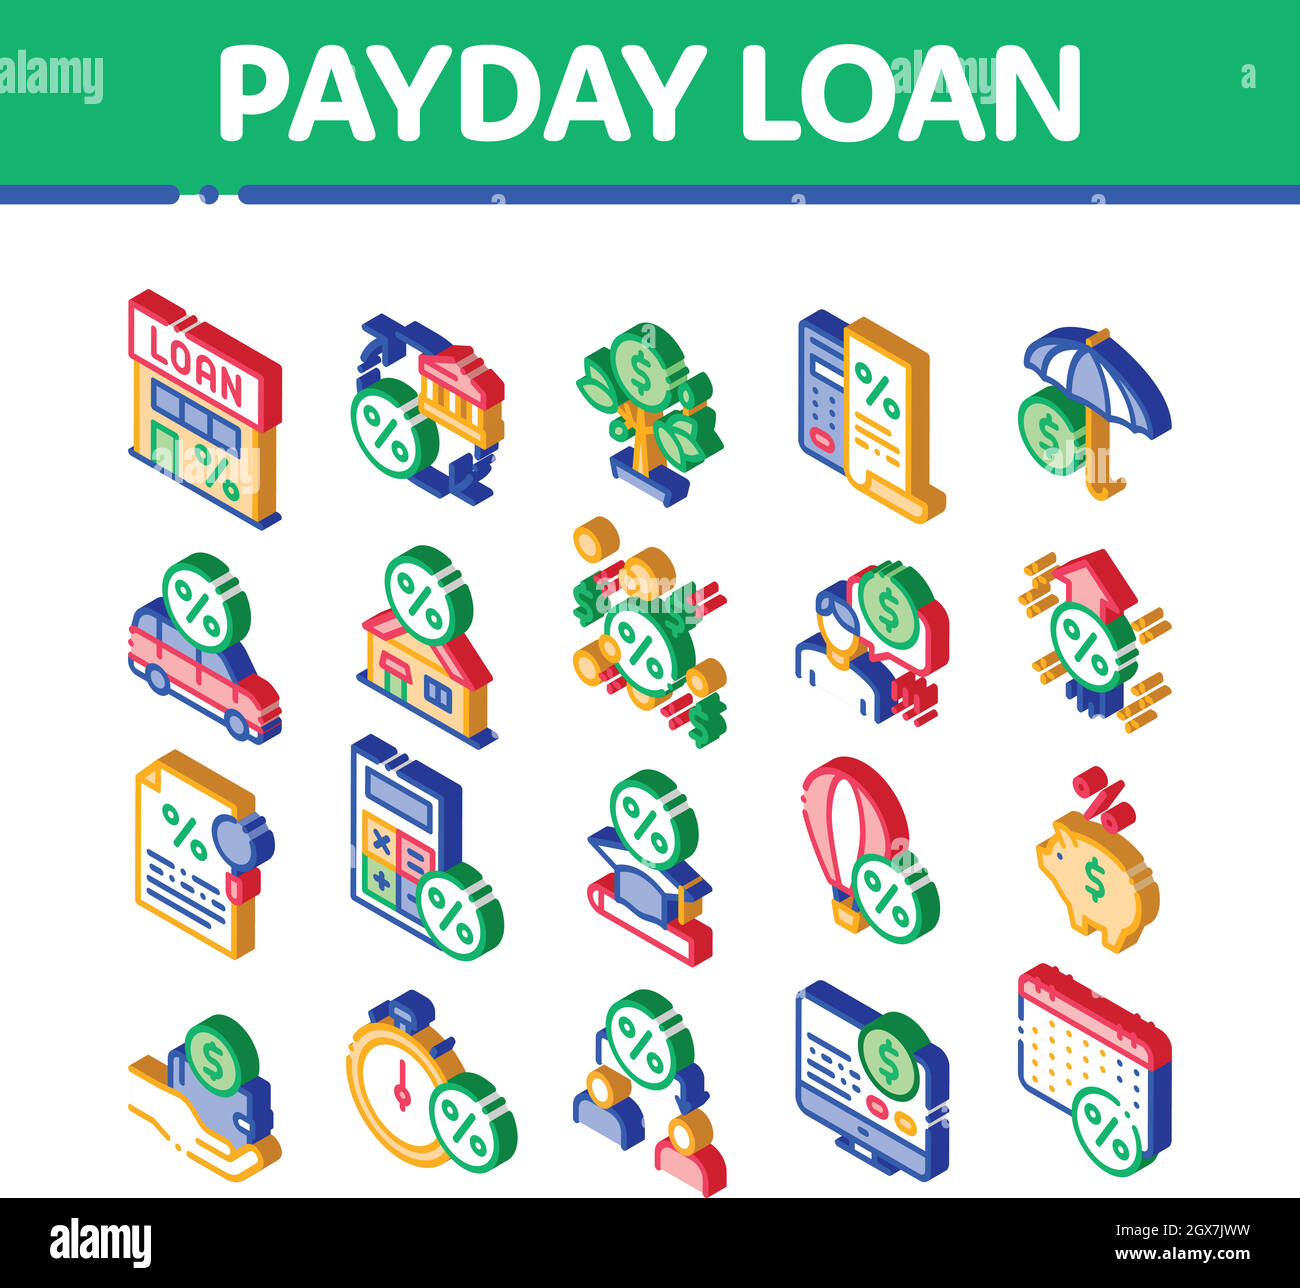 Payday Loan Isometric Elements Icons Imposta vettore Illustrazione Vettoriale